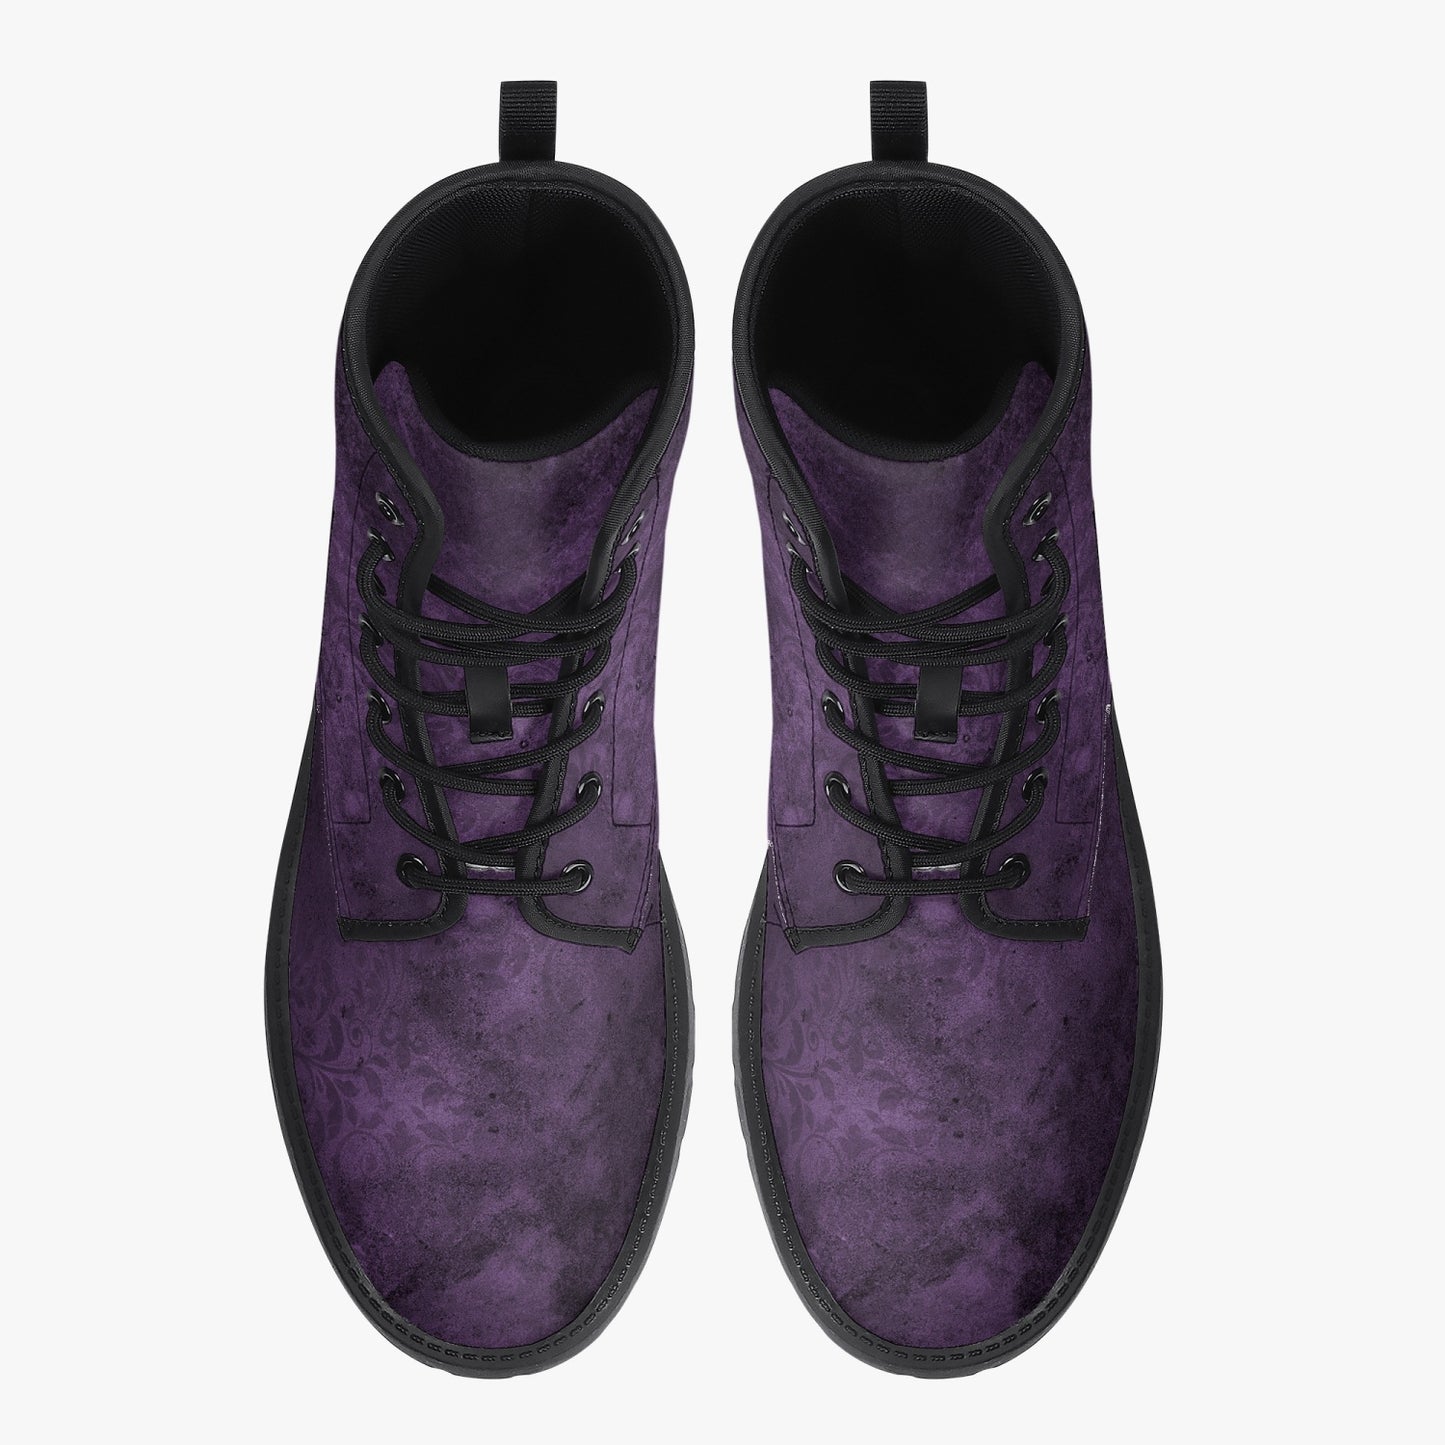 Purple Gothic Grunge Vegan leather Combat Boots - Vegan Leather Purple Boots (JPREG68)